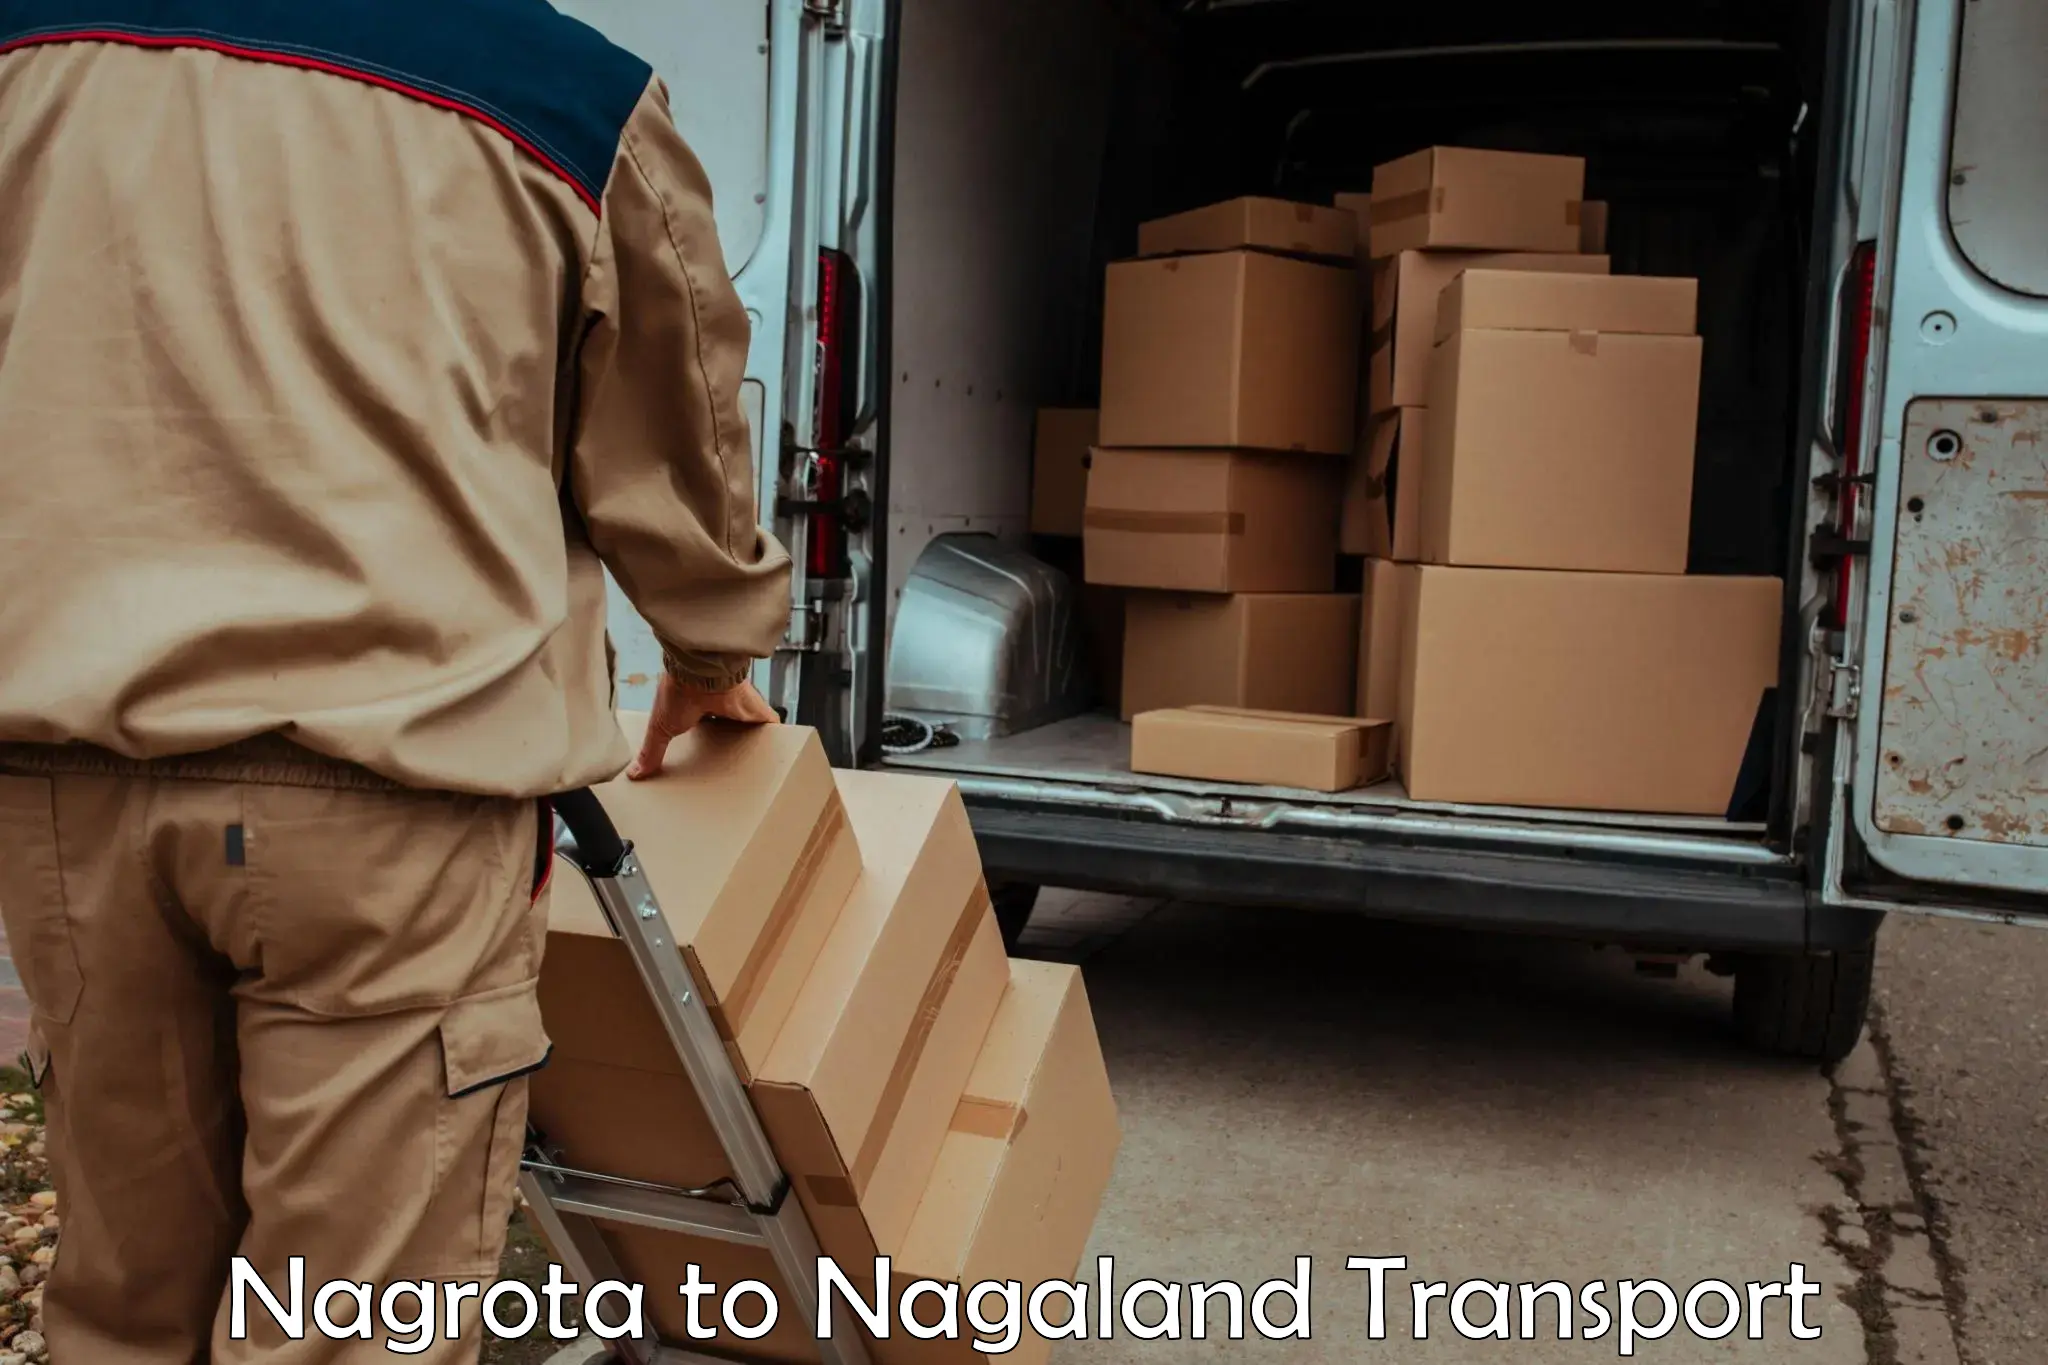 Commercial transport service Nagrota to Nagaland